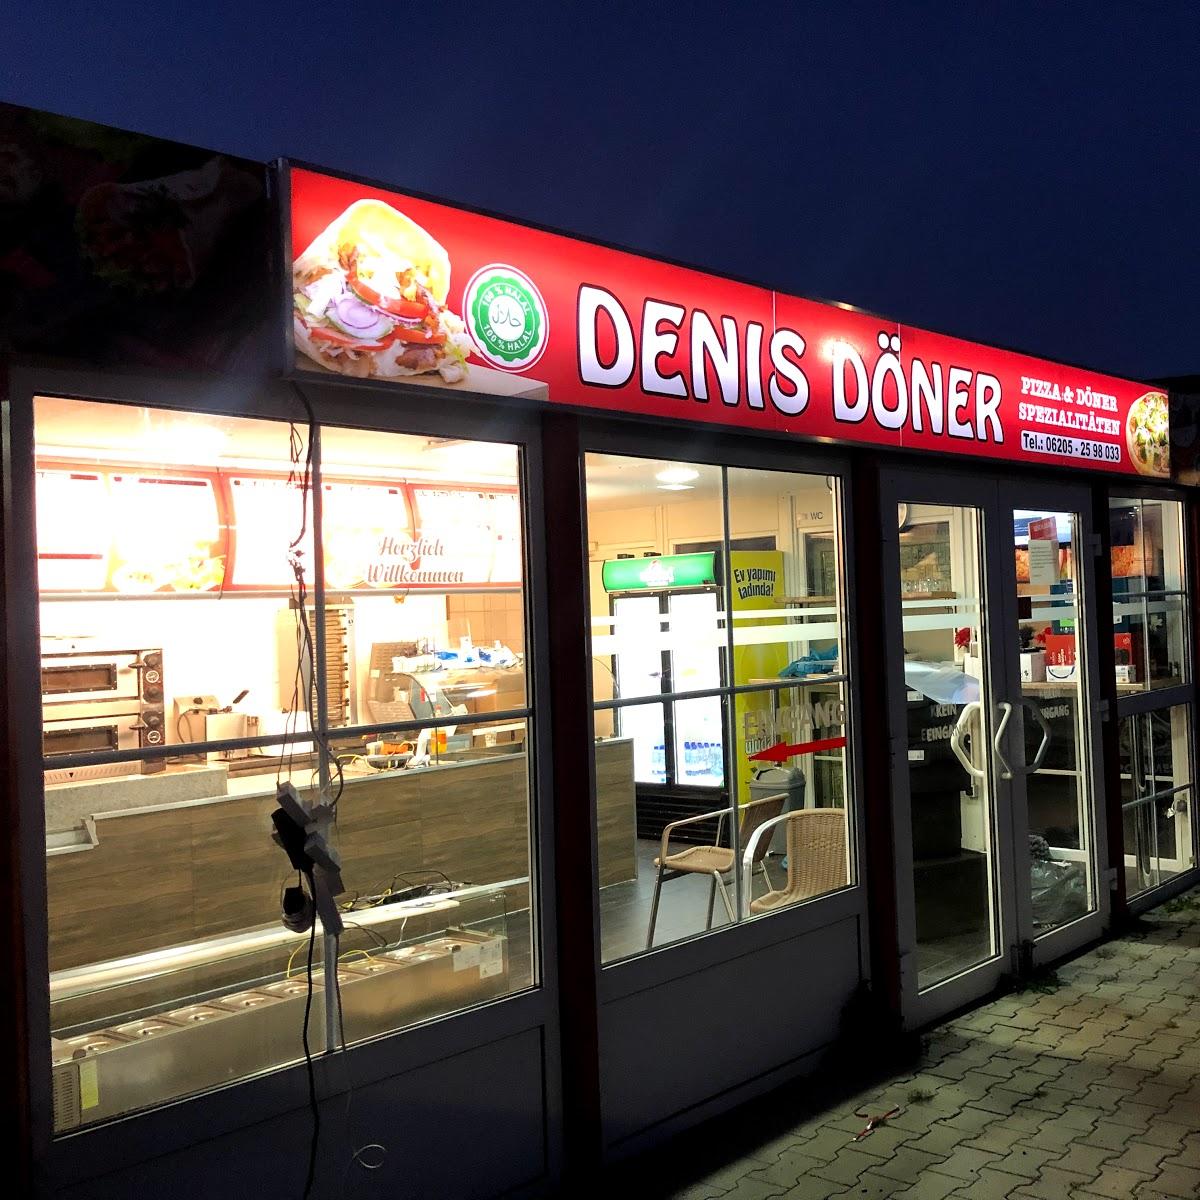 Restaurant "Denis Döner - Pizza & Döner Spezialitäten" in Hockenheim